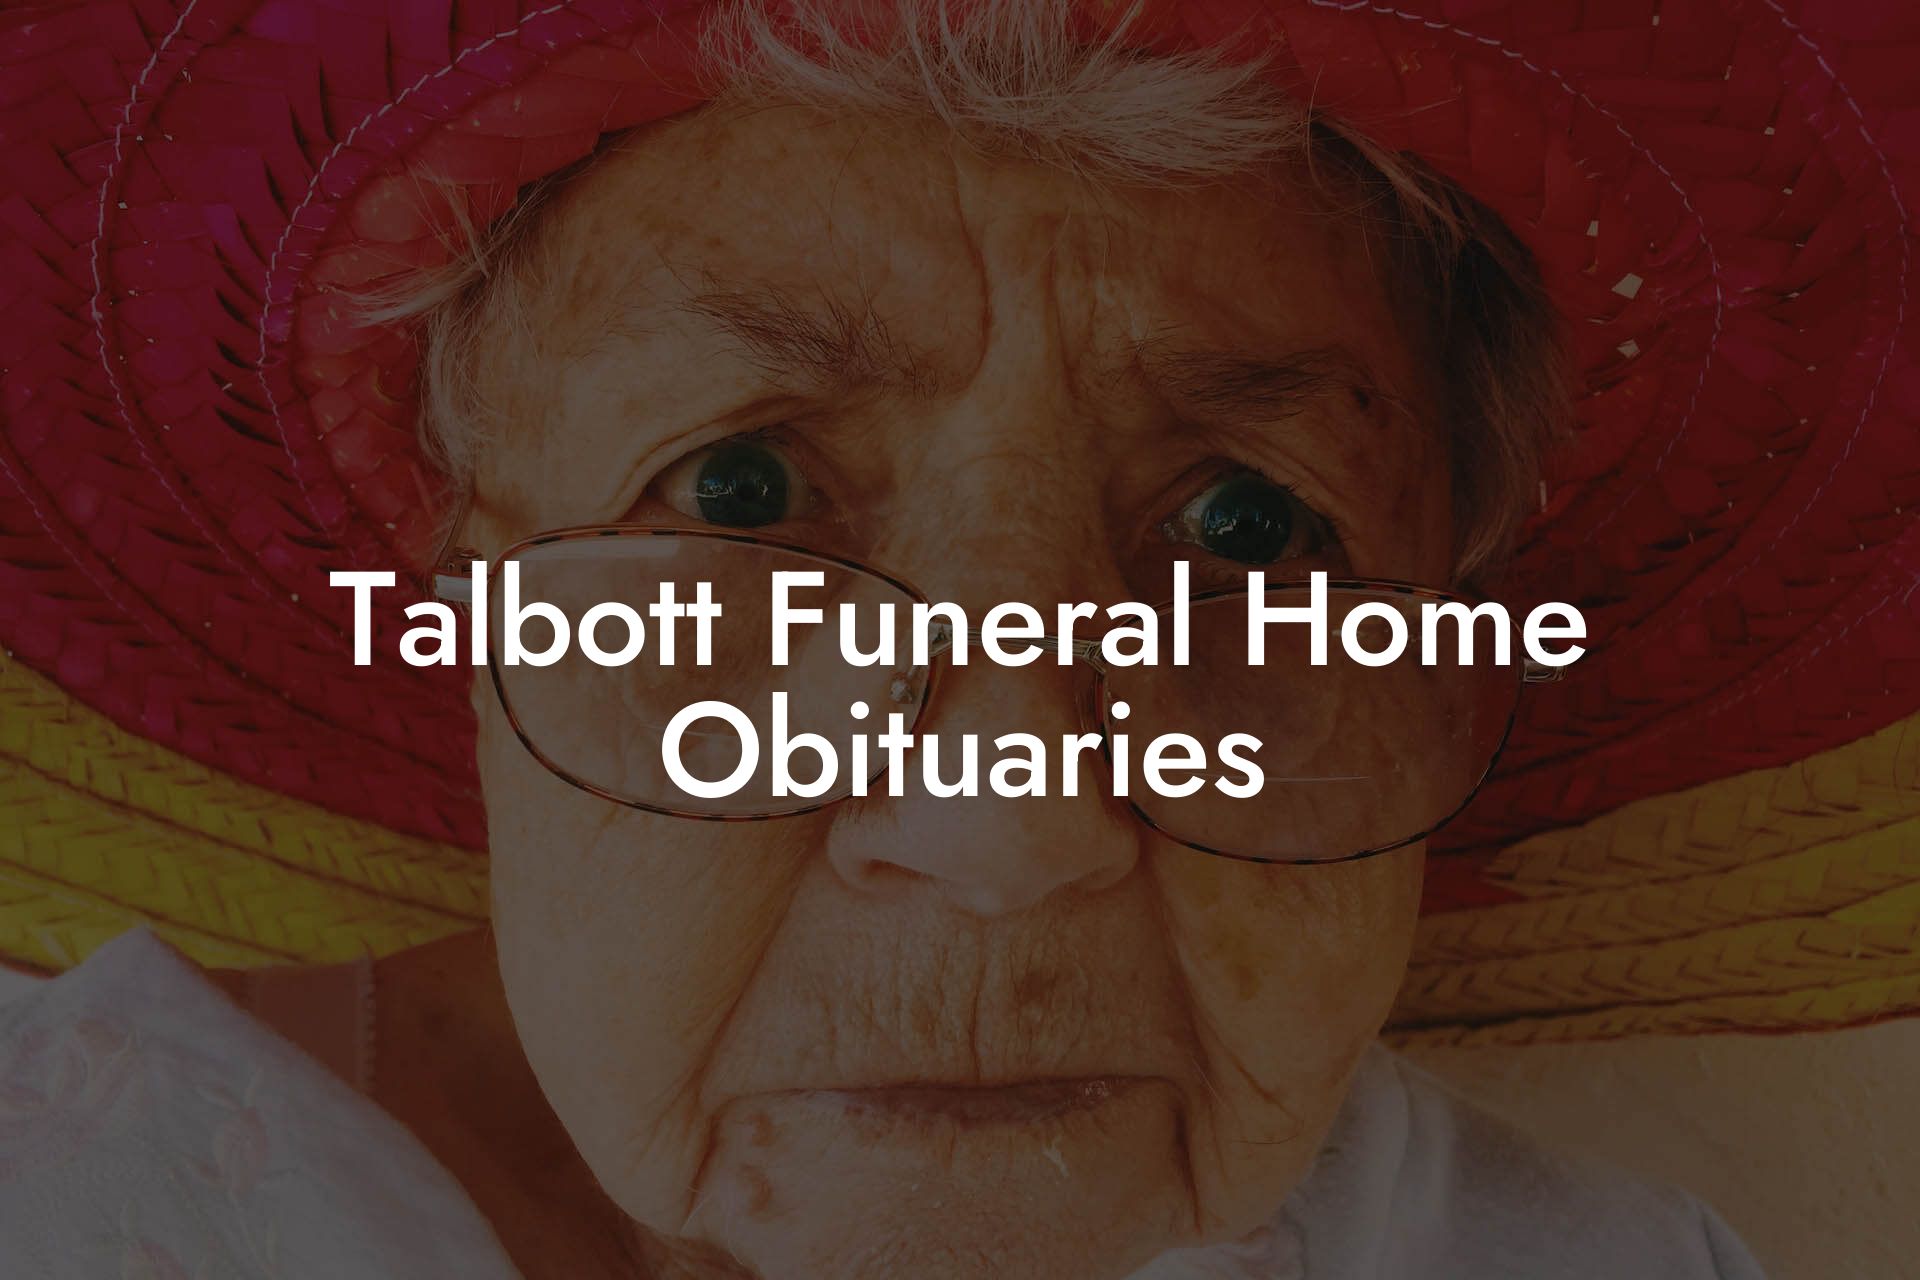 Talbott Funeral Home Obituaries